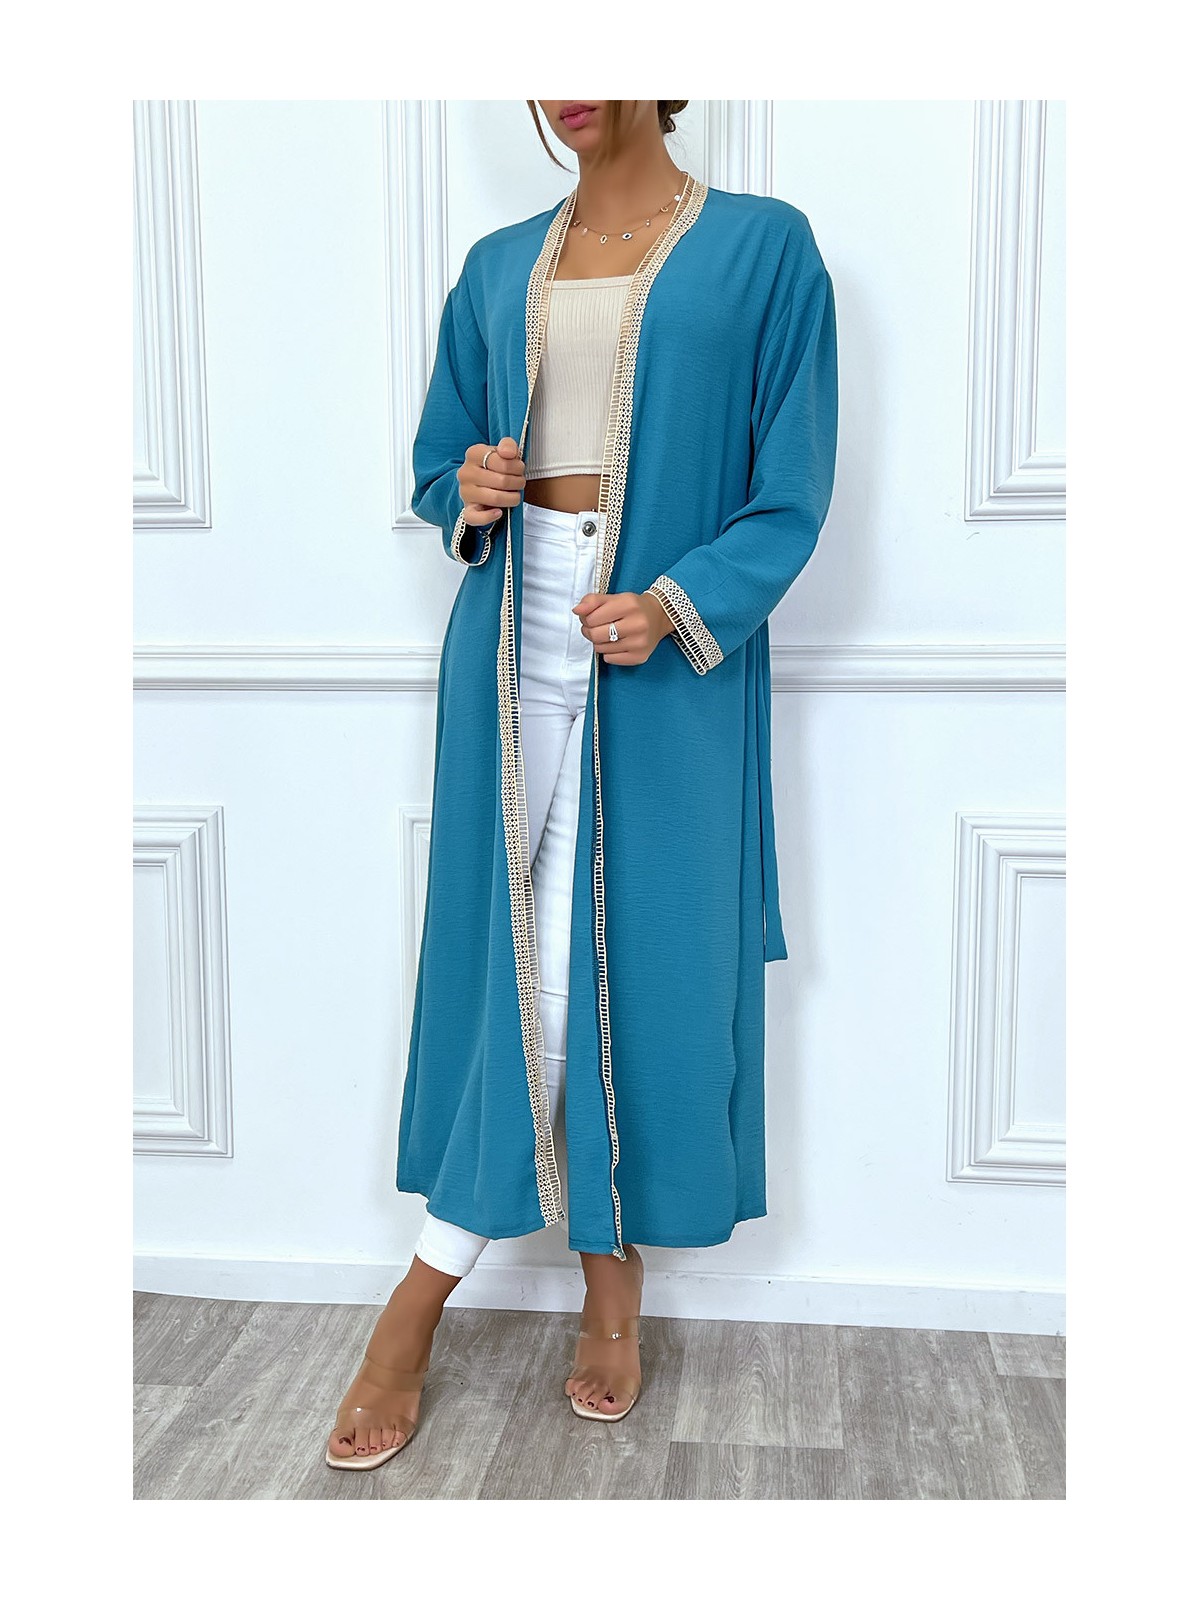 Kimono bleu canard à bordure brodé beige et ceinture - 3